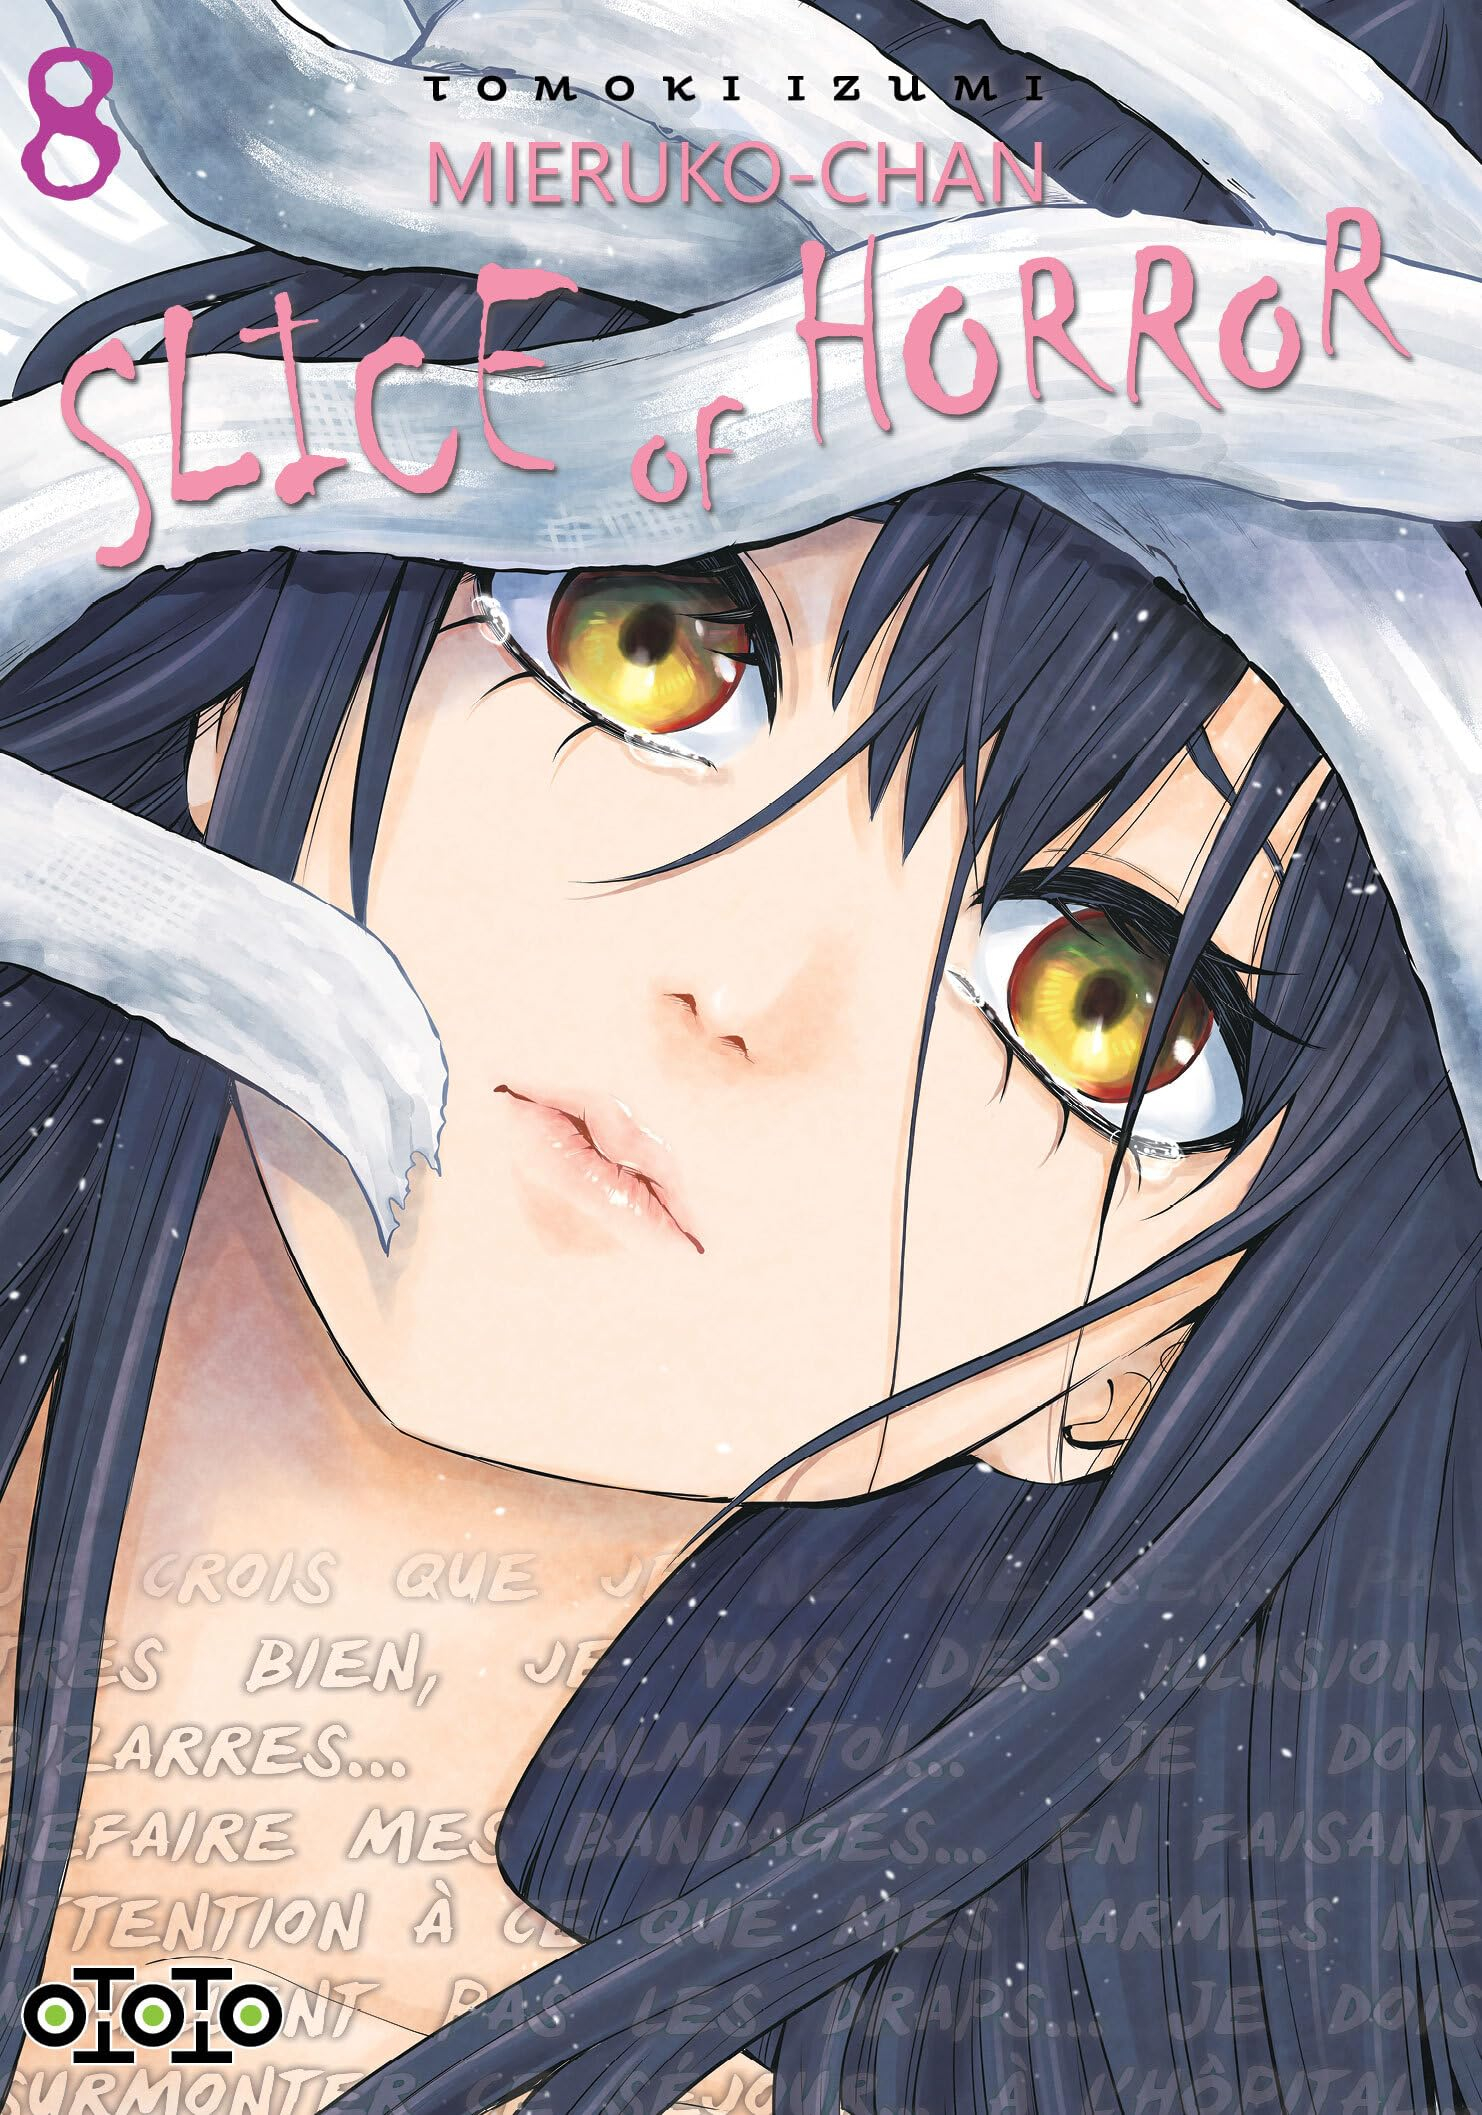 Mieruko-chan : slice of horror. Vol. 8